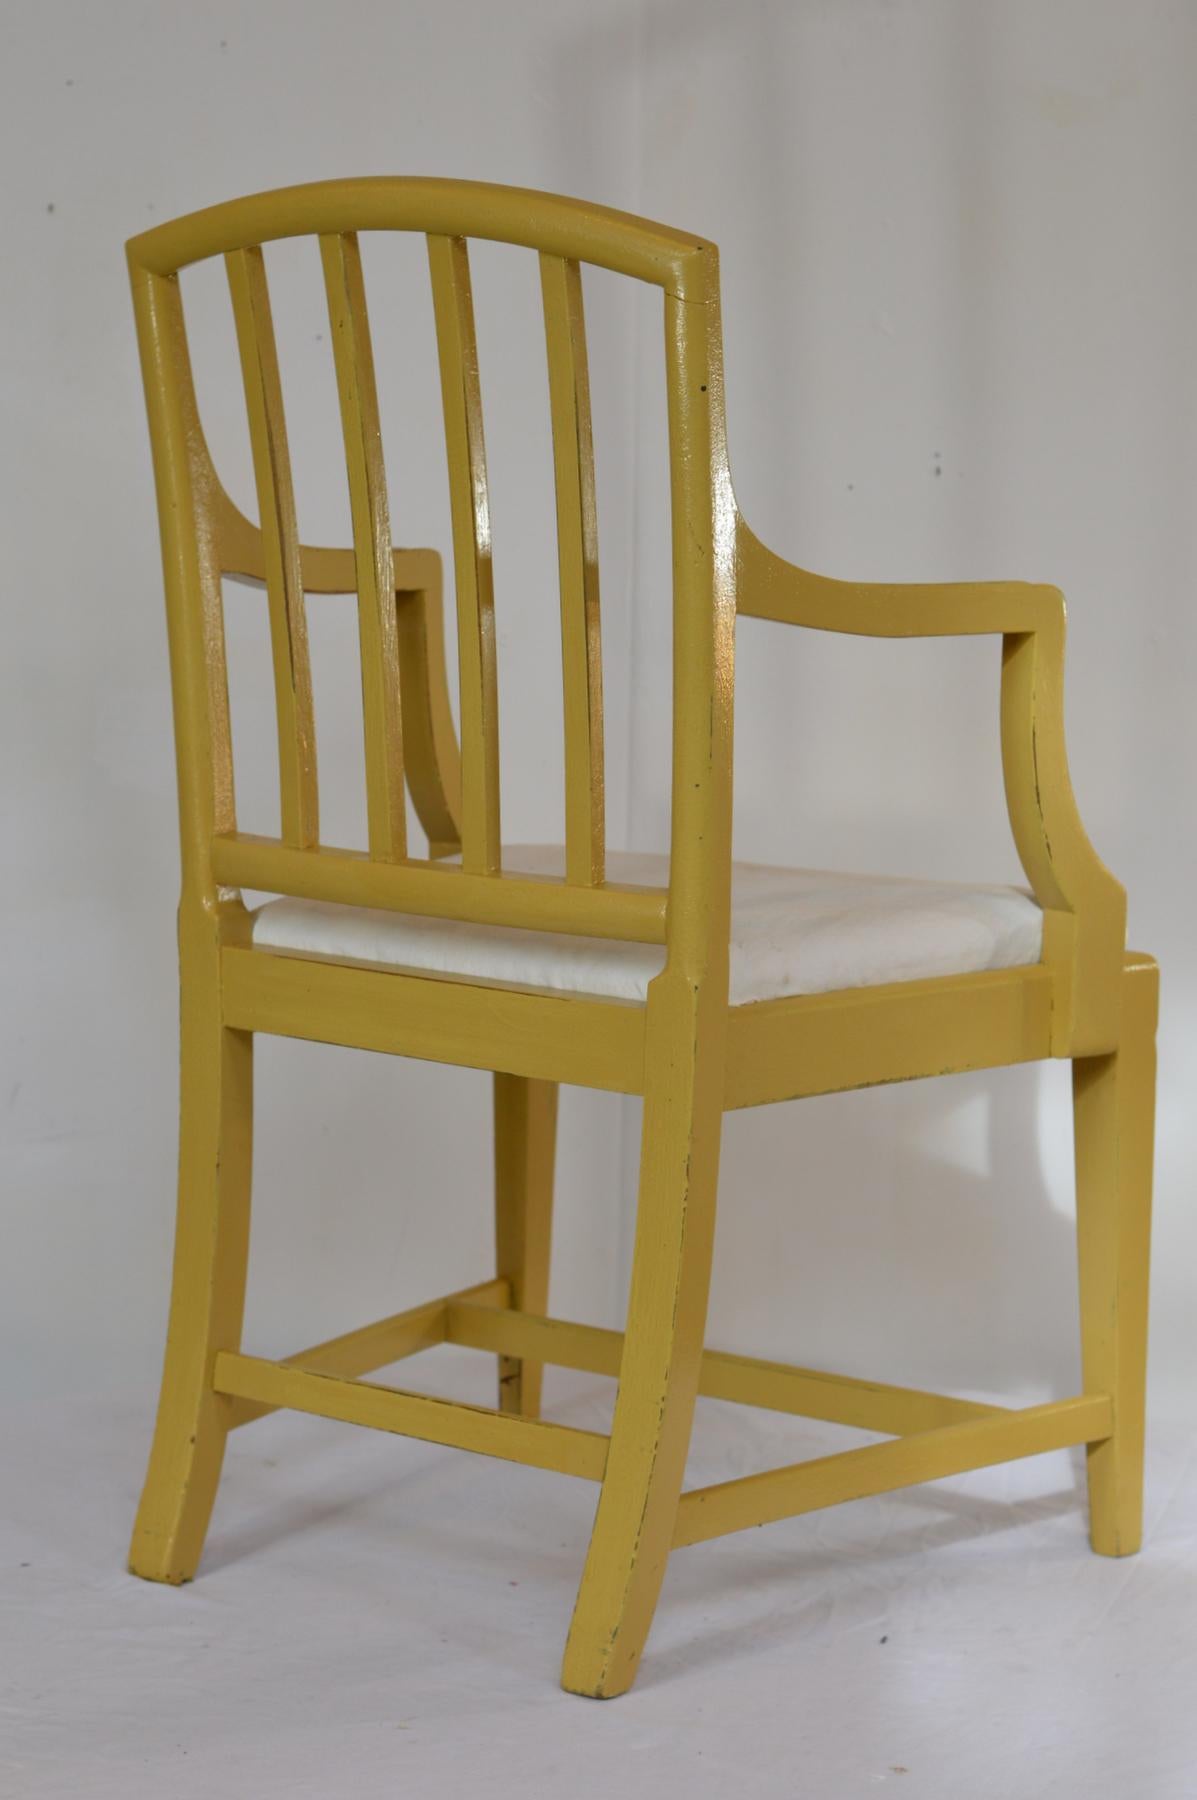 English Country House Hepplewhite Chairs in Churlish Green, Set of 6 2